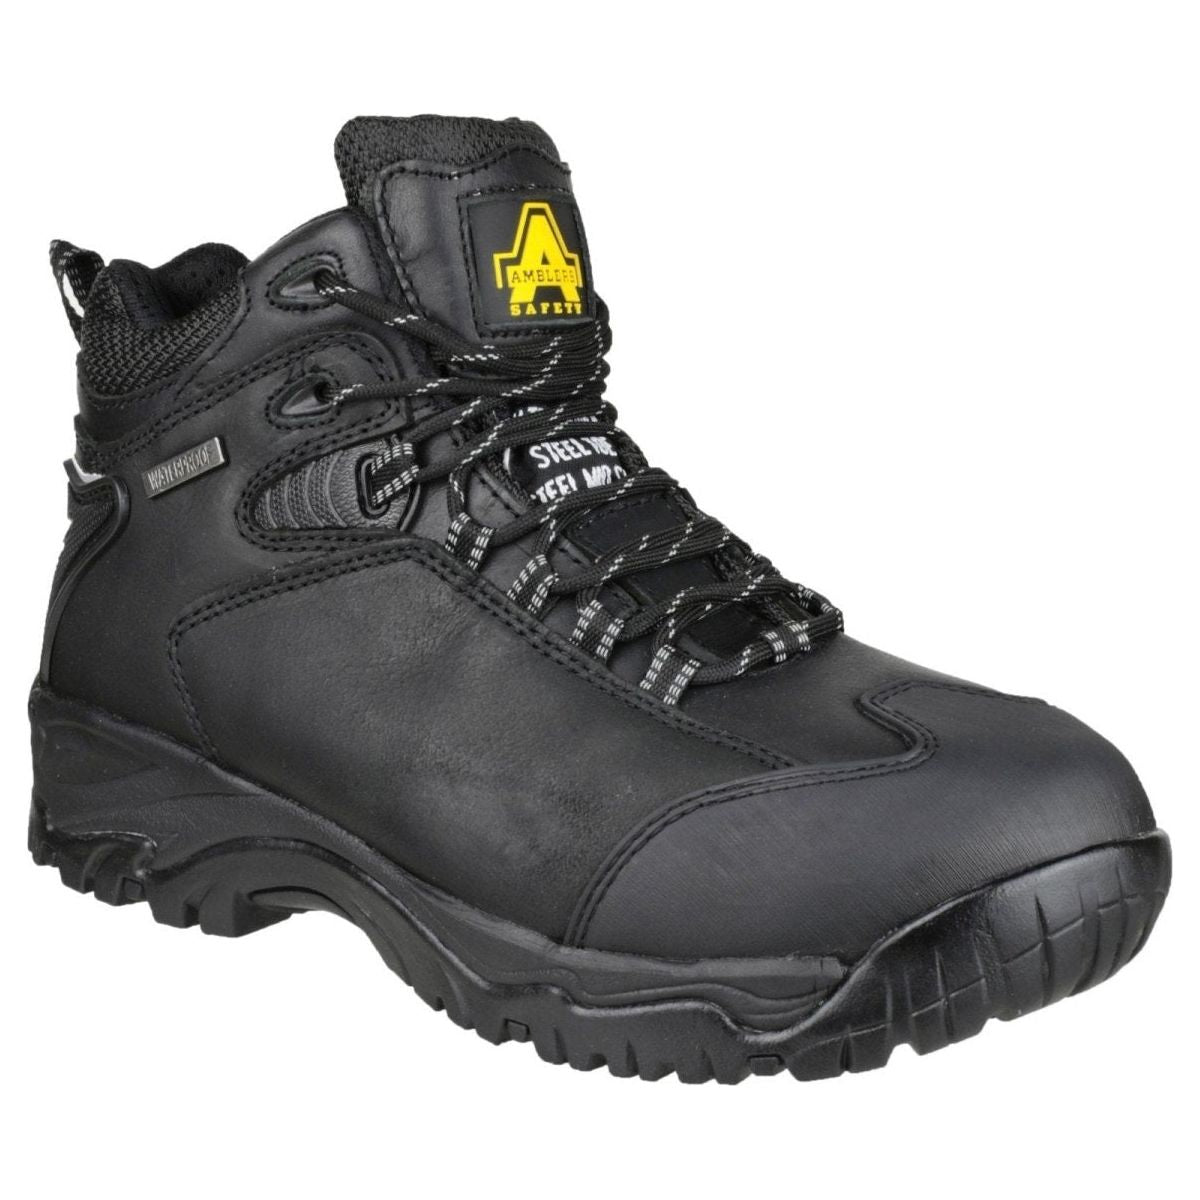 Amblers Fs190N Waterproof Hiking Safety Boots Mens - workweargurus.com